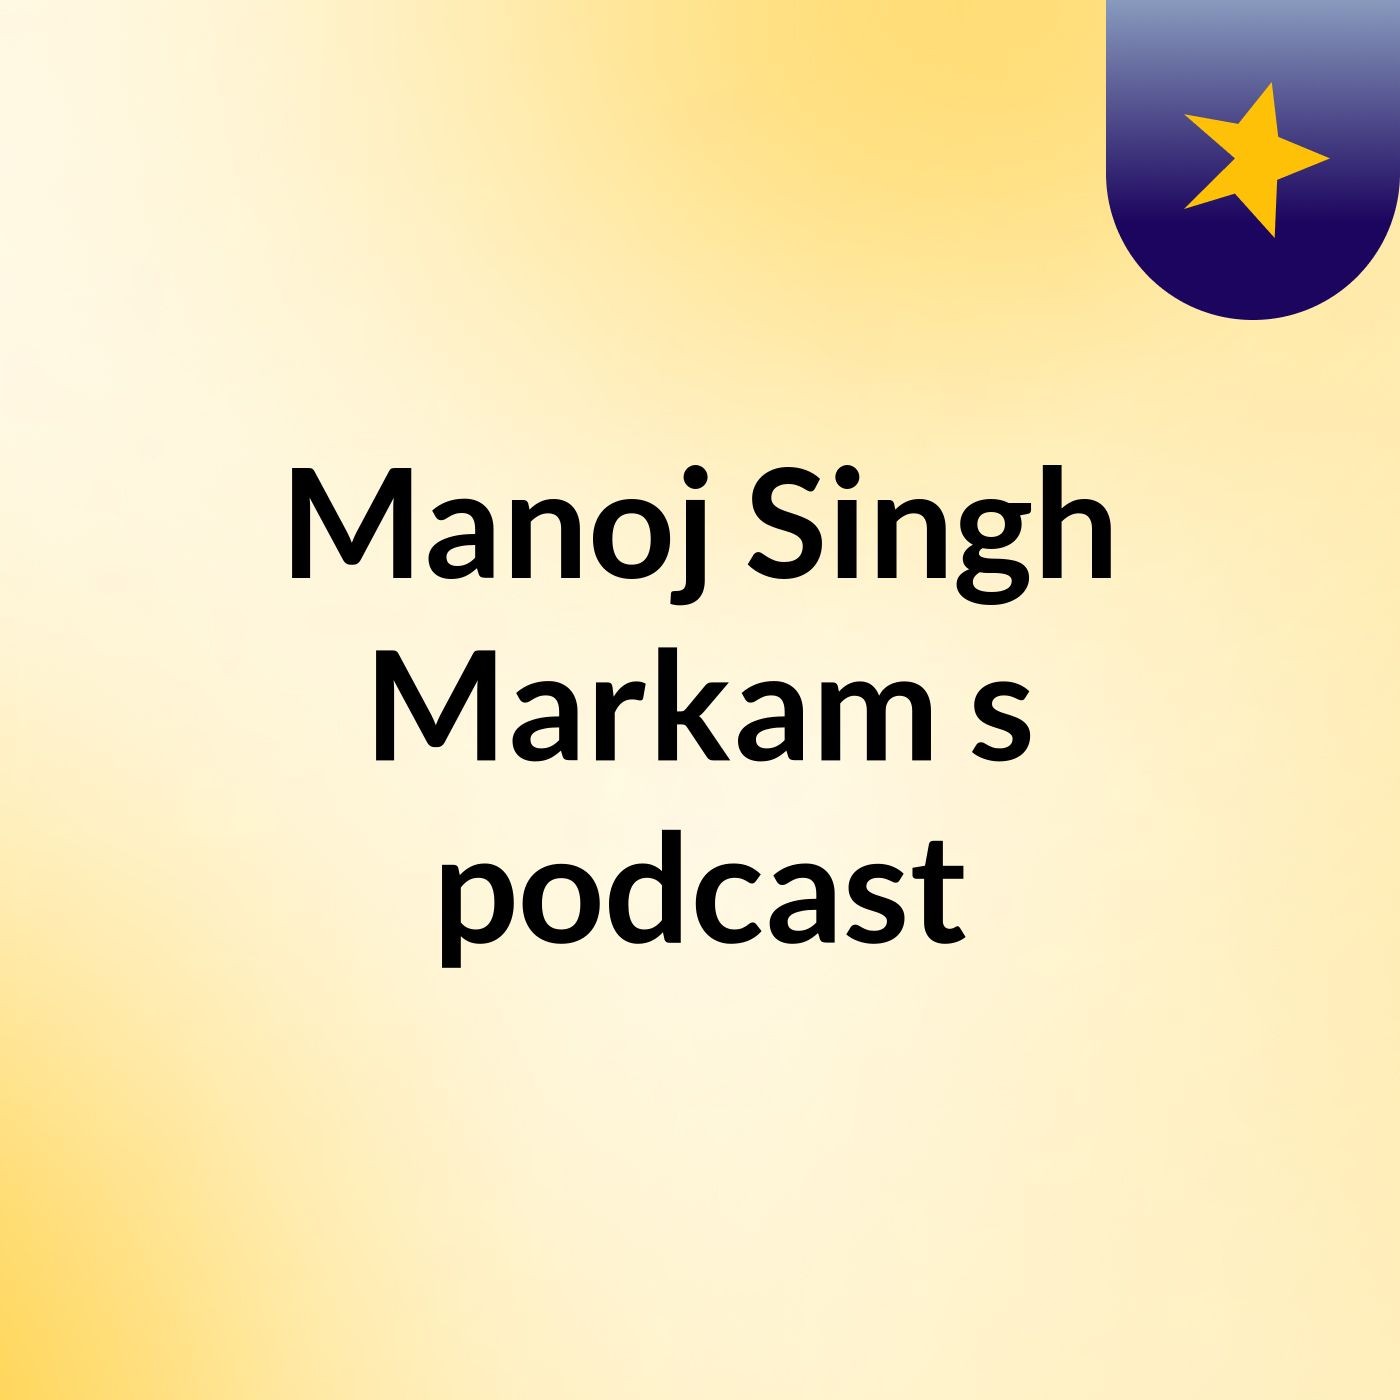 Episode 2 - Manoj Singh Markam's podcast